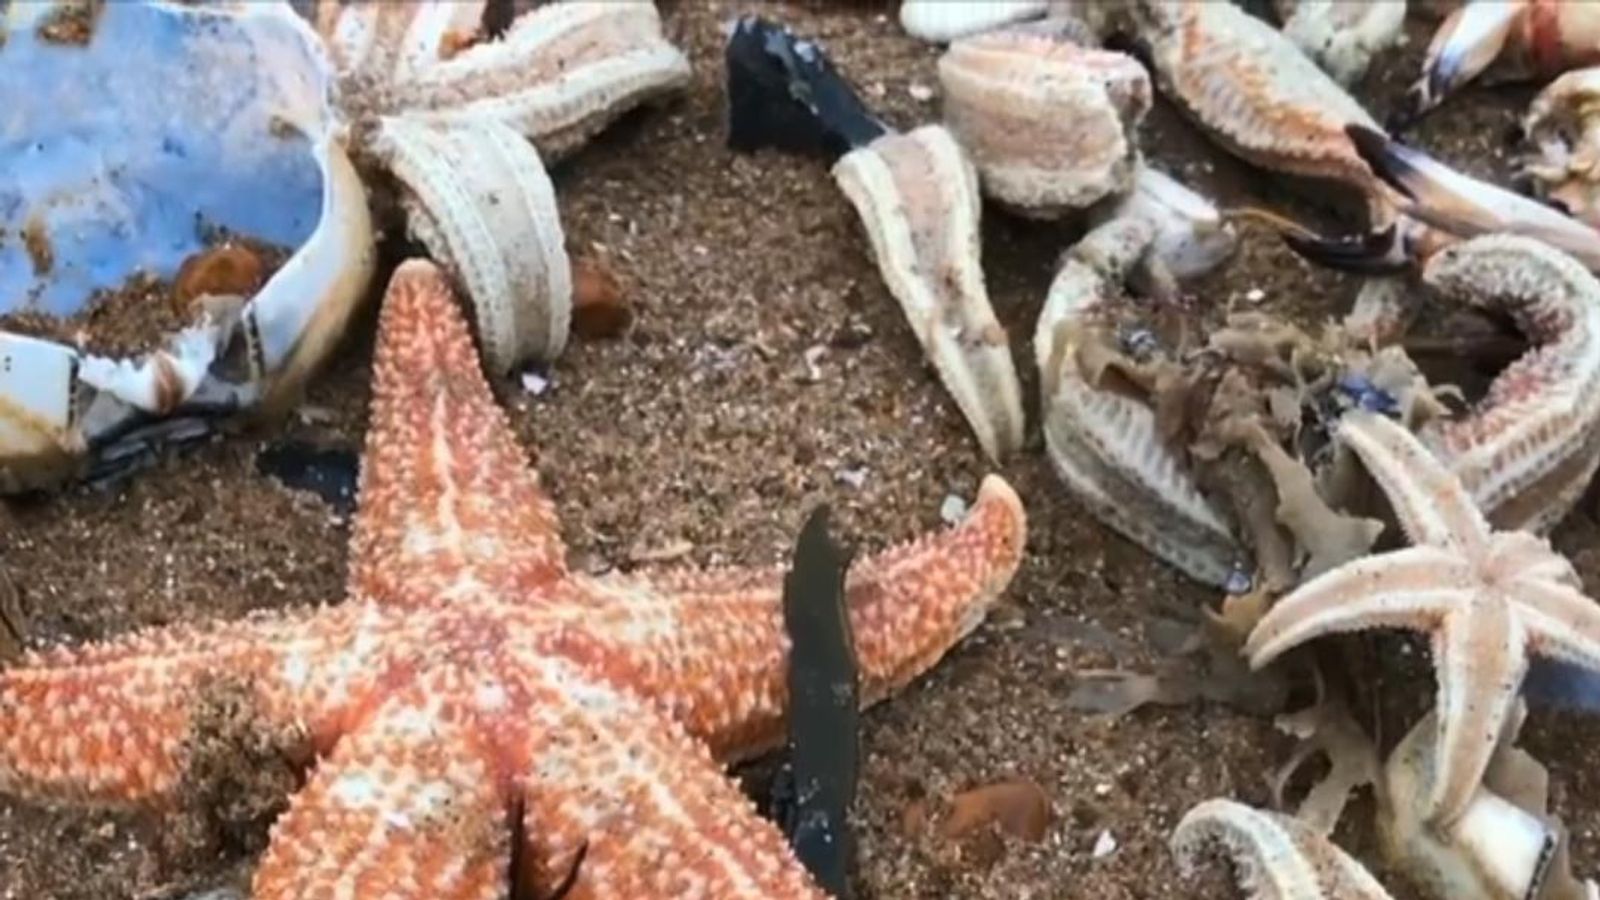 Study reveals location of starfish's head